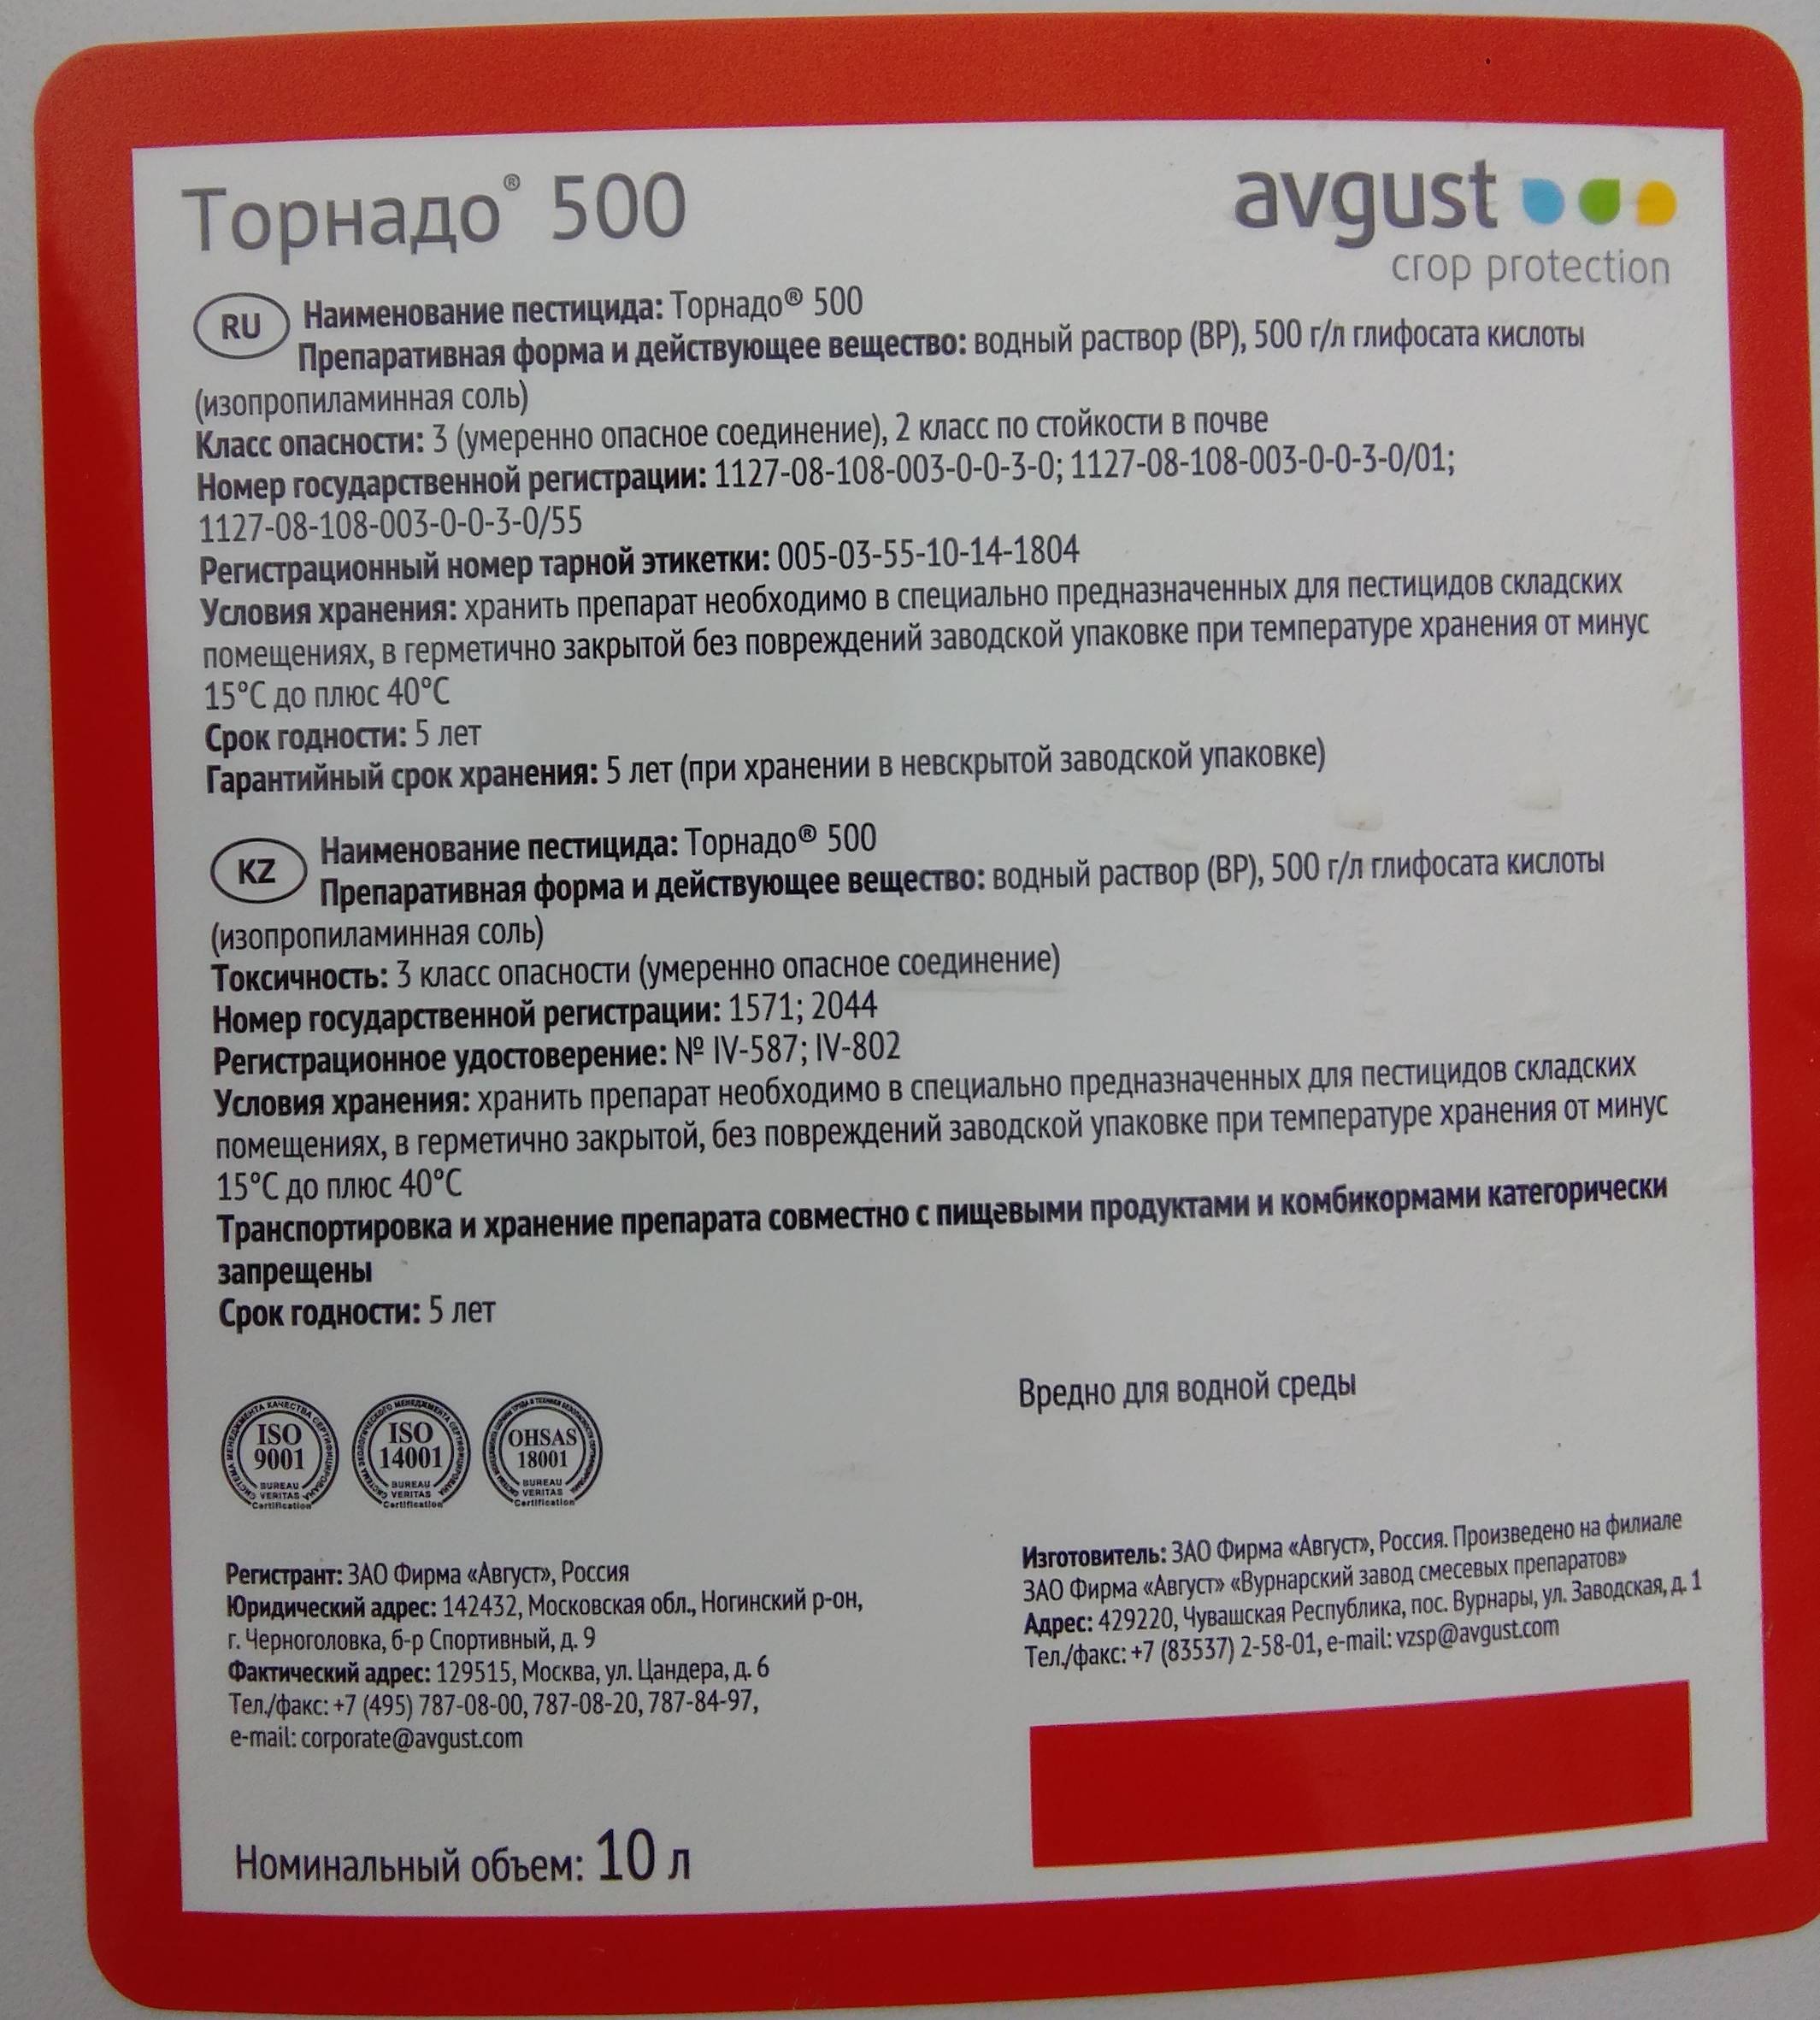 Торнадо 540, вр (гербициды, пестициды) — agroxxi